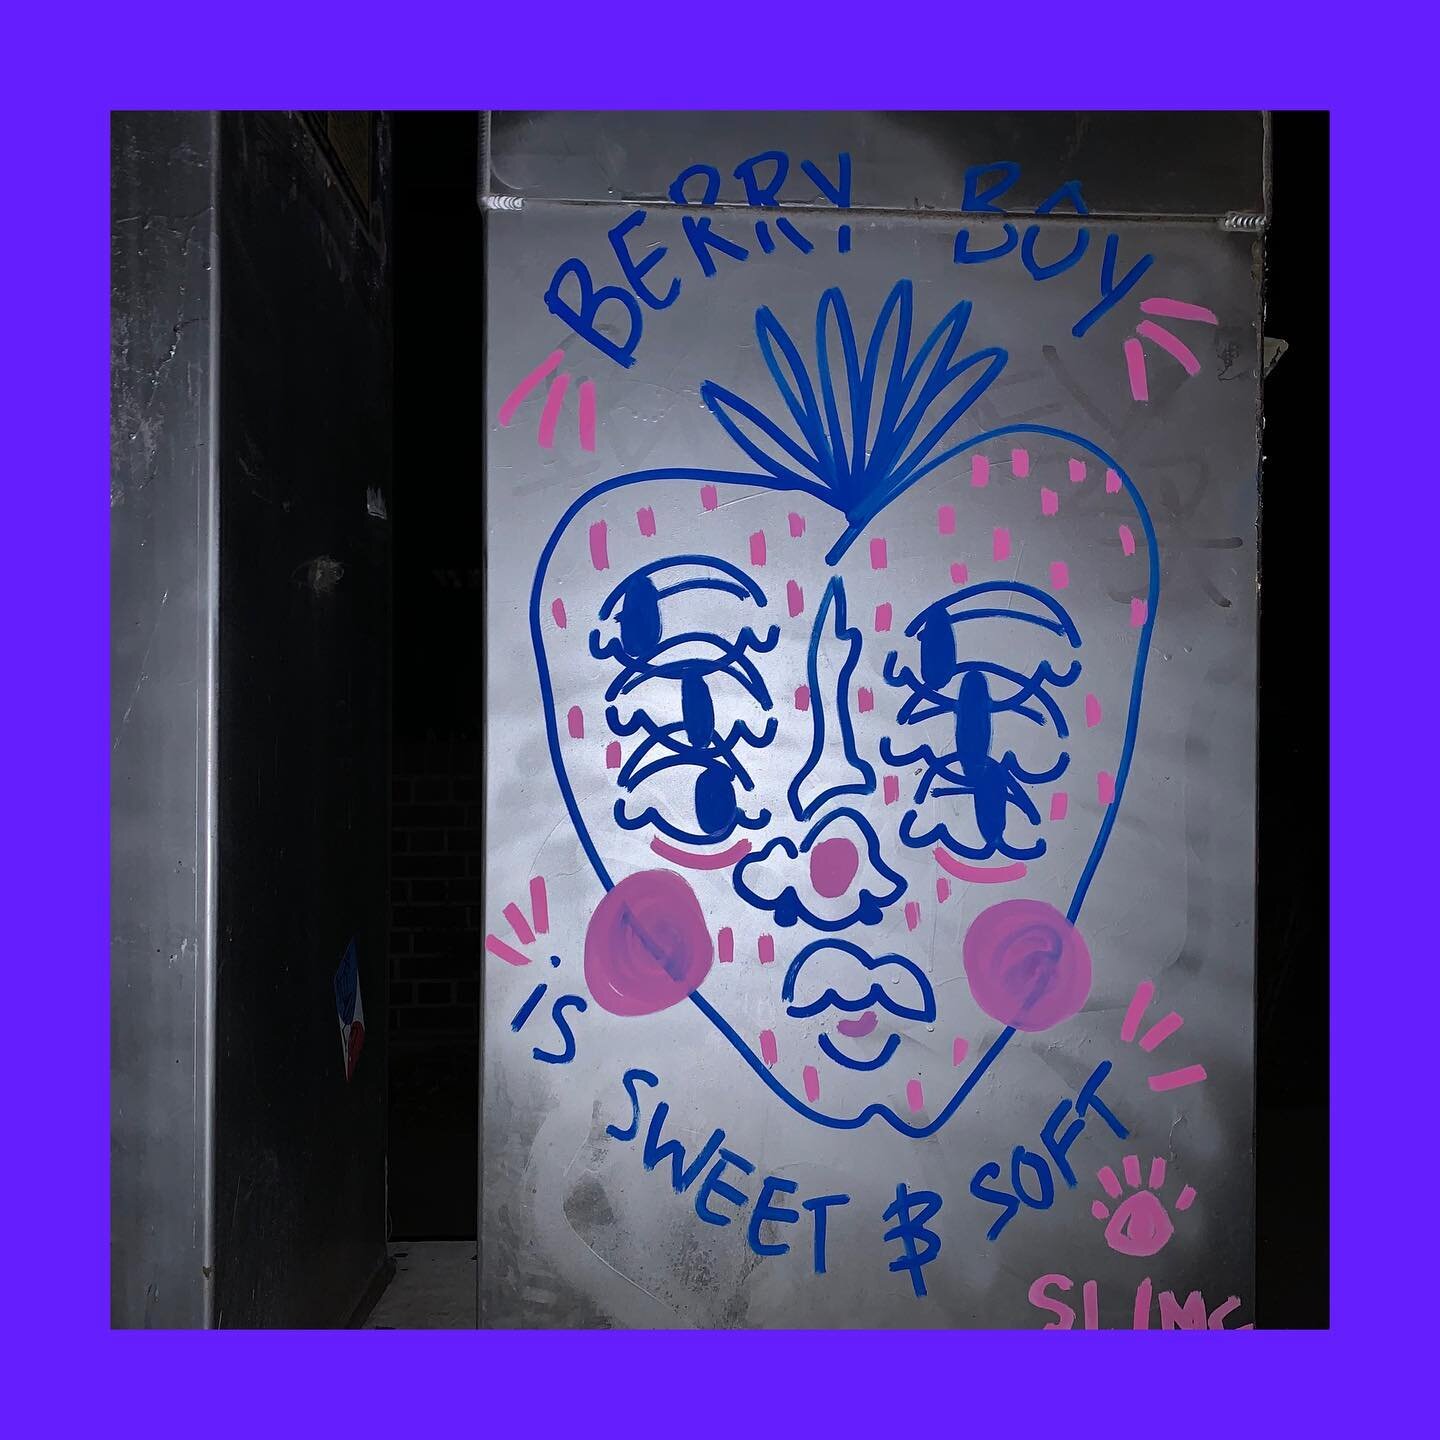 DUMP 🍓🍓🍓

.
.
.
.
.
#trans #lgbtq #graffiti #streetart #tag #denver #slimekid #caphilldenver #comic #drawing #illustration #art #graphicdesign #design #paintings #journal #journaling #sketch #pen #brushpen #paintmarker #zine #tagging #poem #Colora